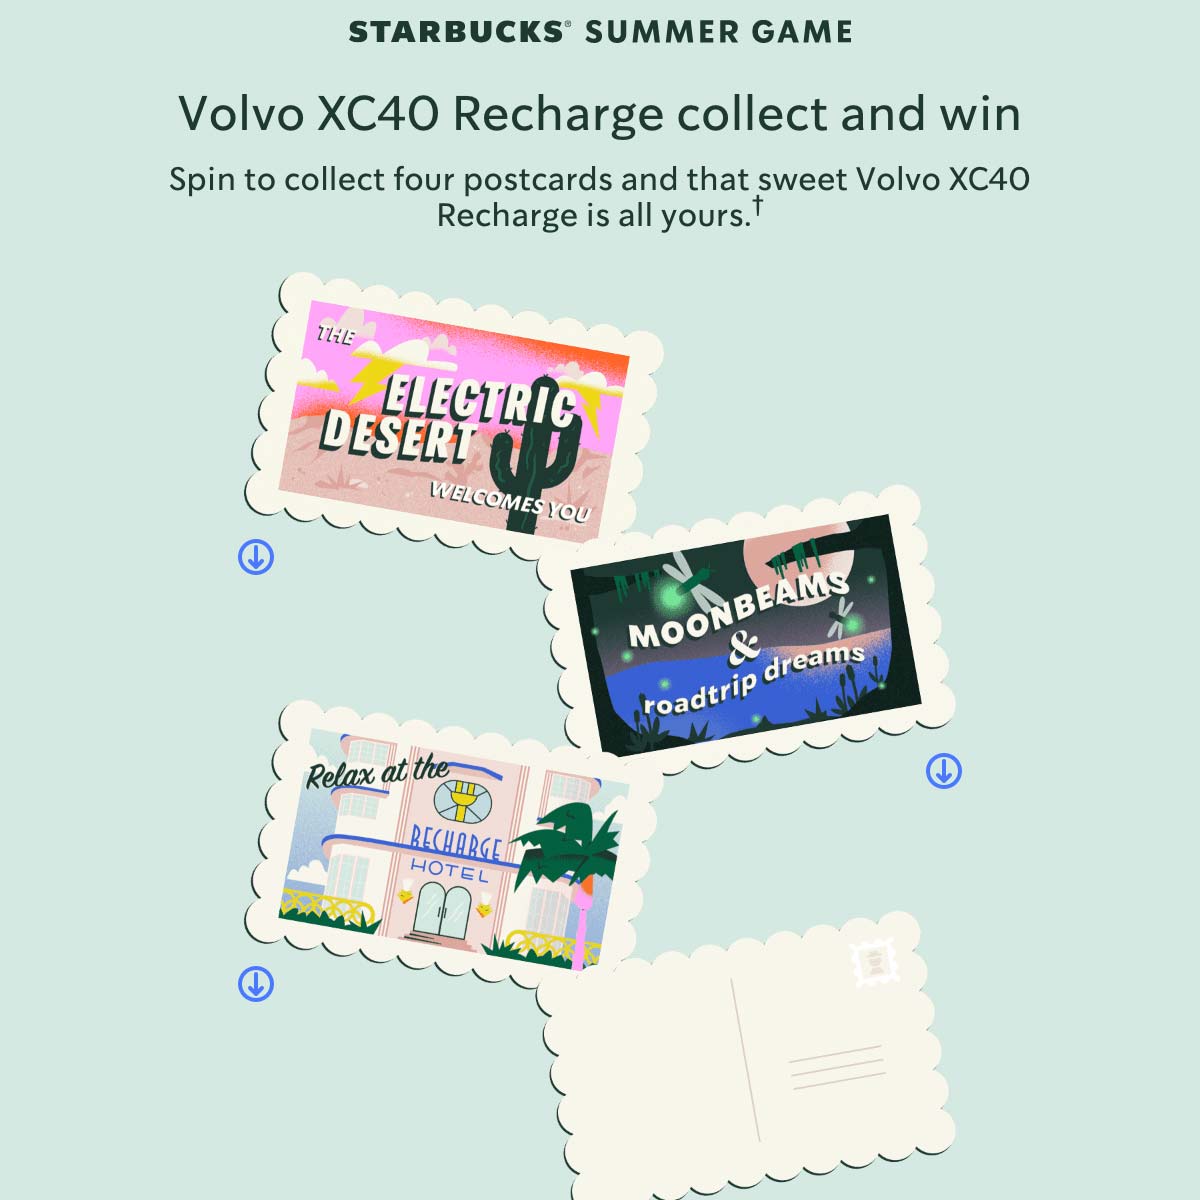 Starbucks Summer Game postcards game pieces.